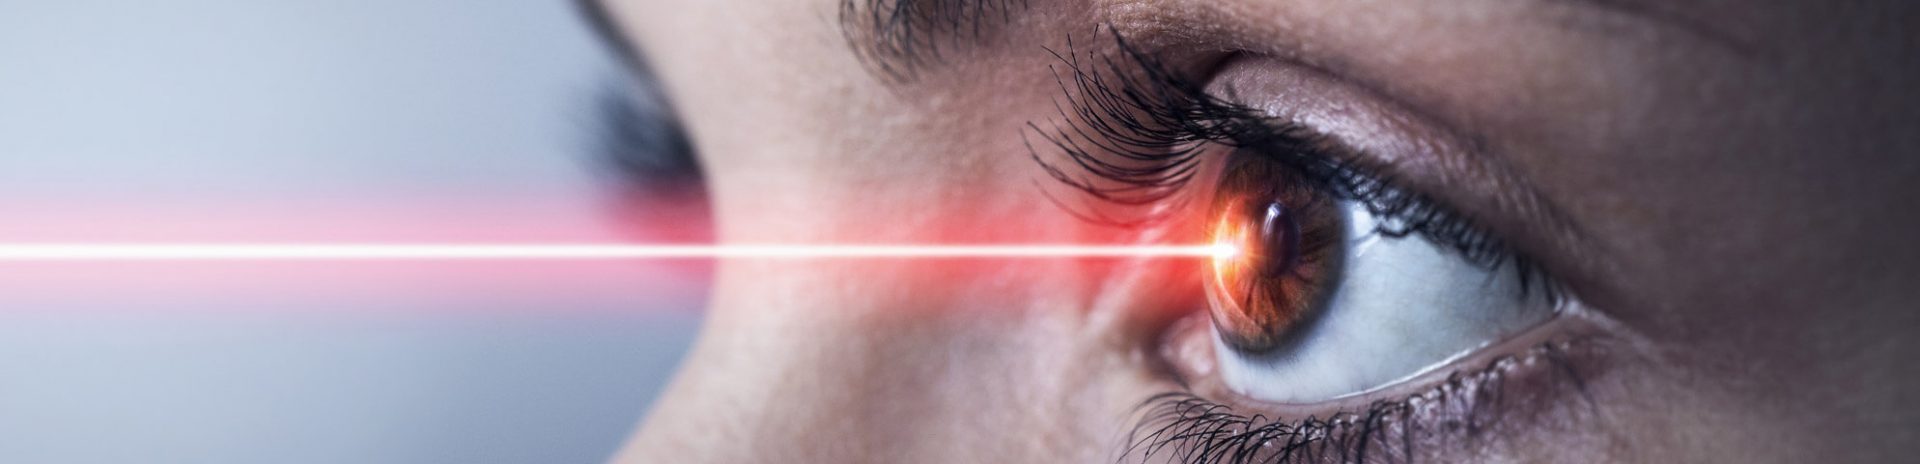 Lasertherapie - Auge